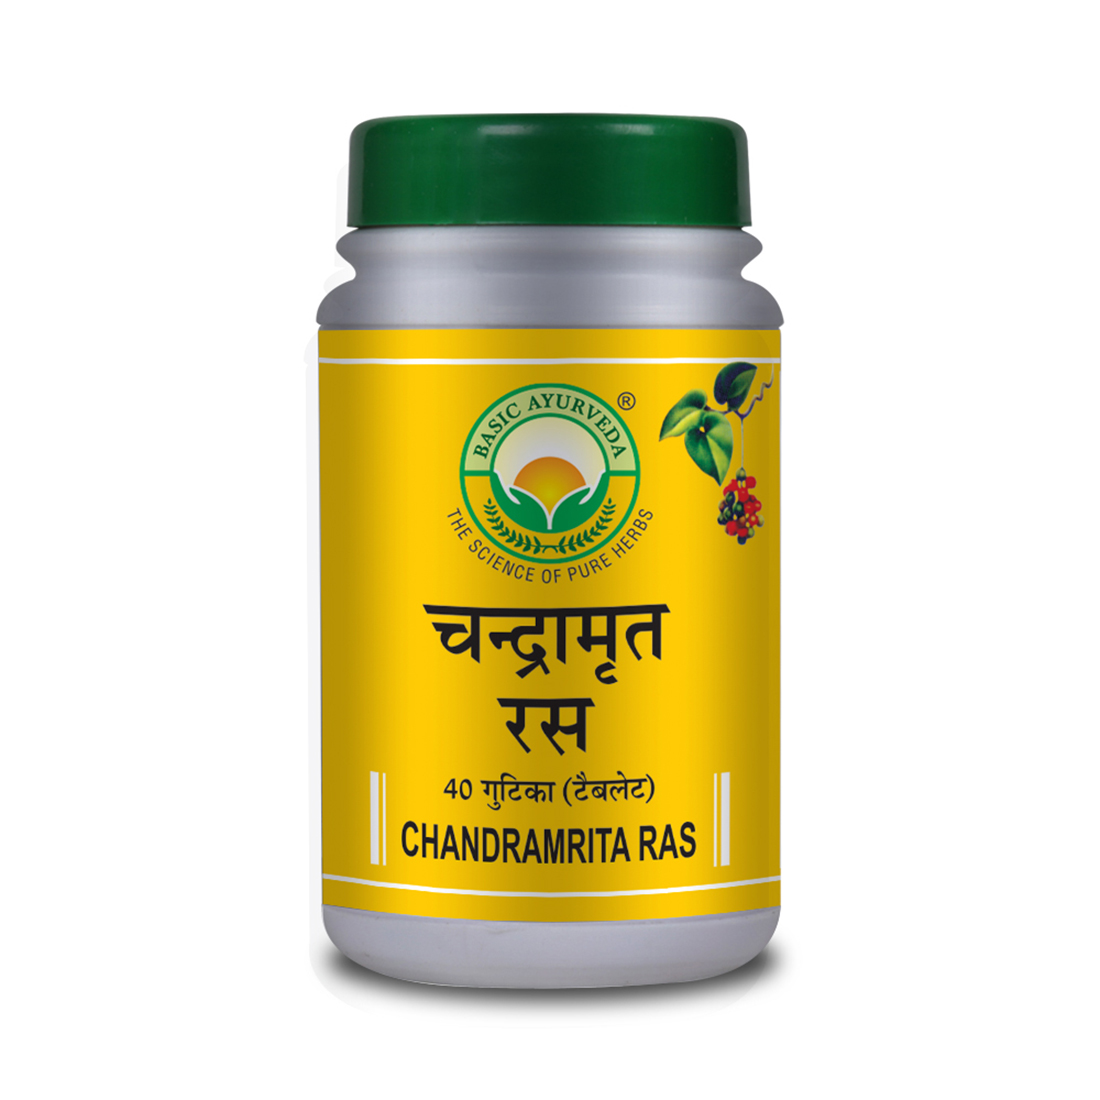 Chandramrita Ras